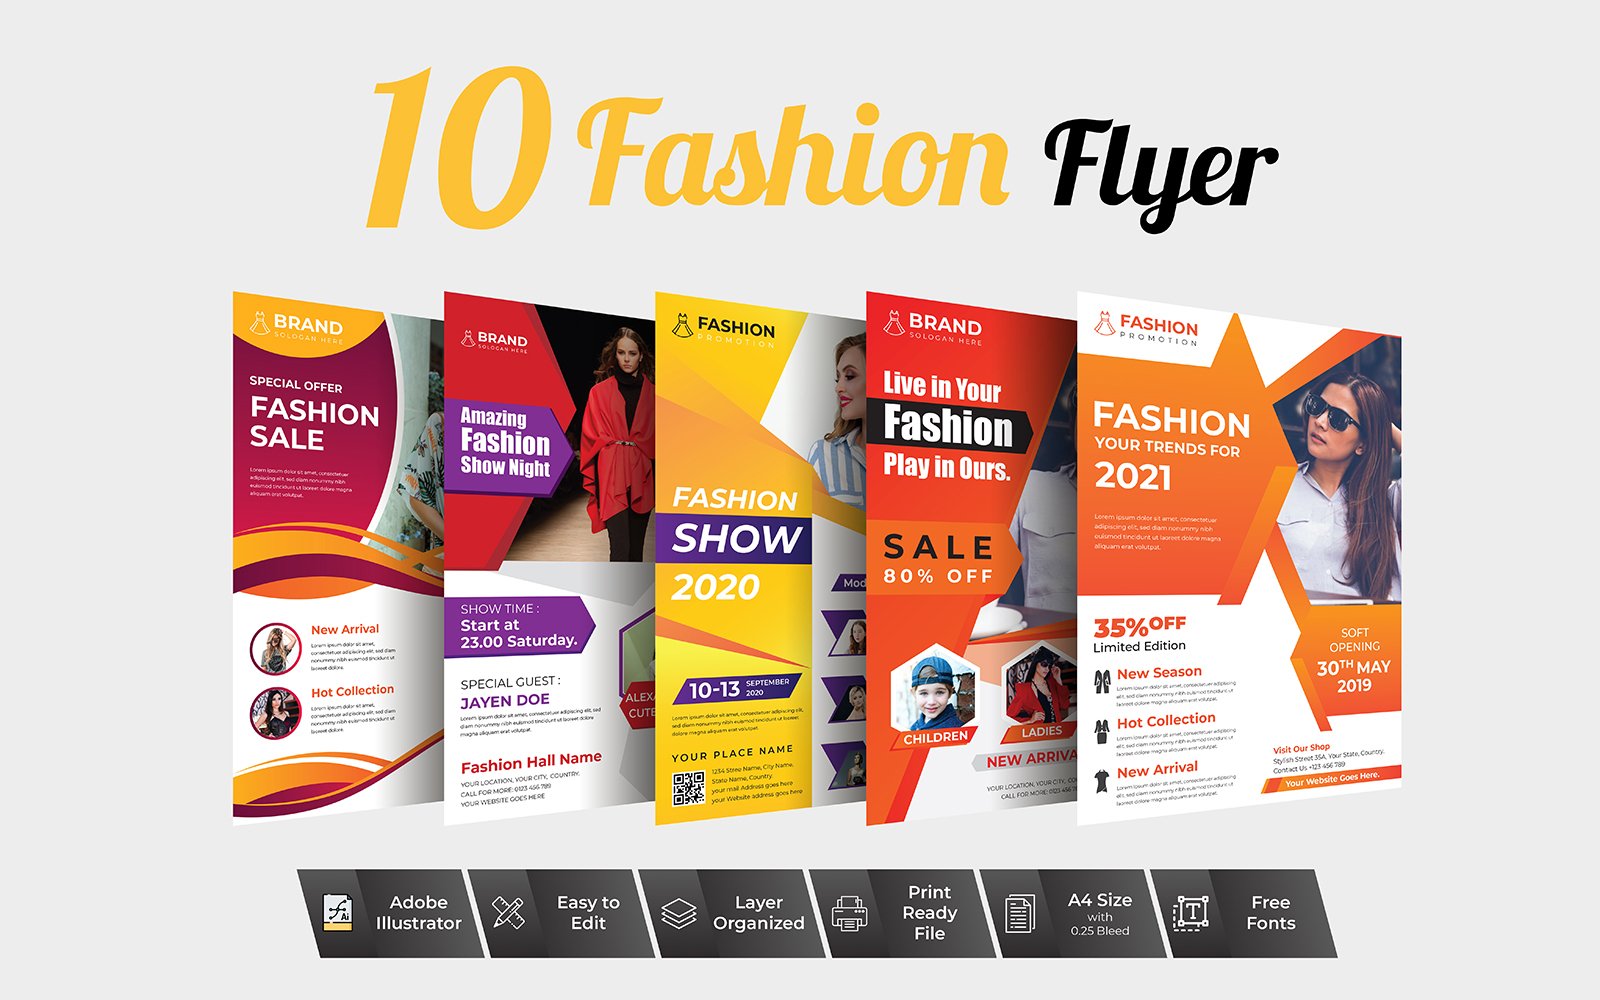 Fashion Flyer Modern Design - Corporate Identity Template